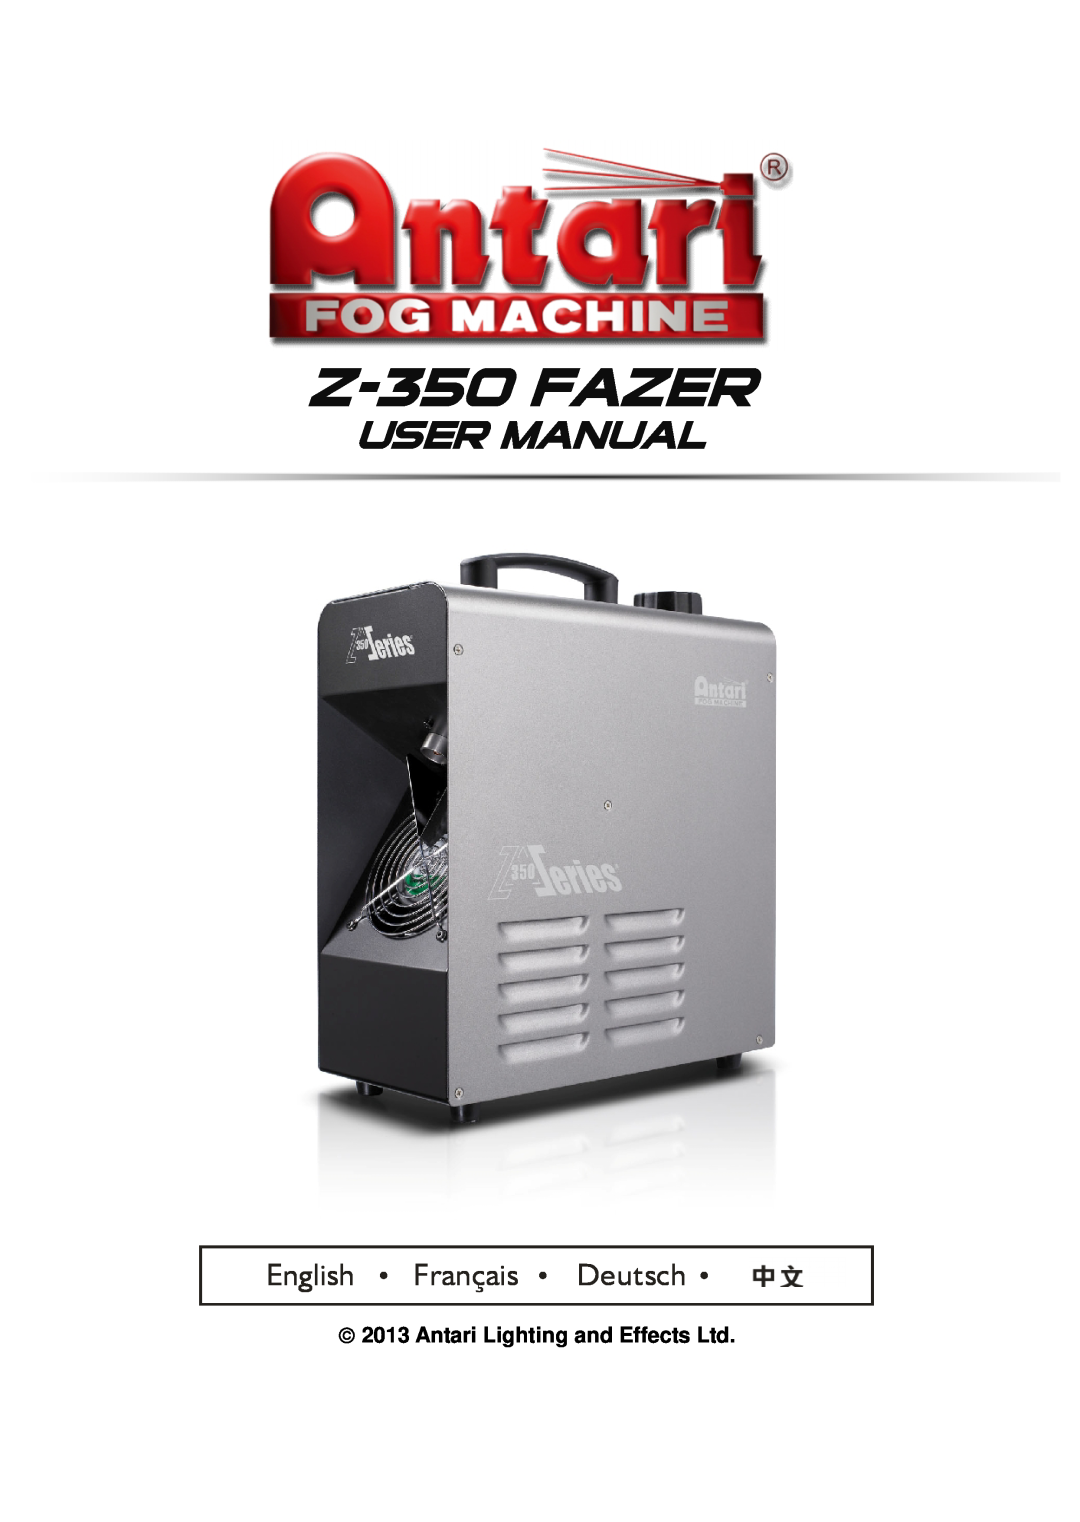 Antari Lighting and Effects user manual Z-350FAZER, User Manual, English • Français • Deutsch • 